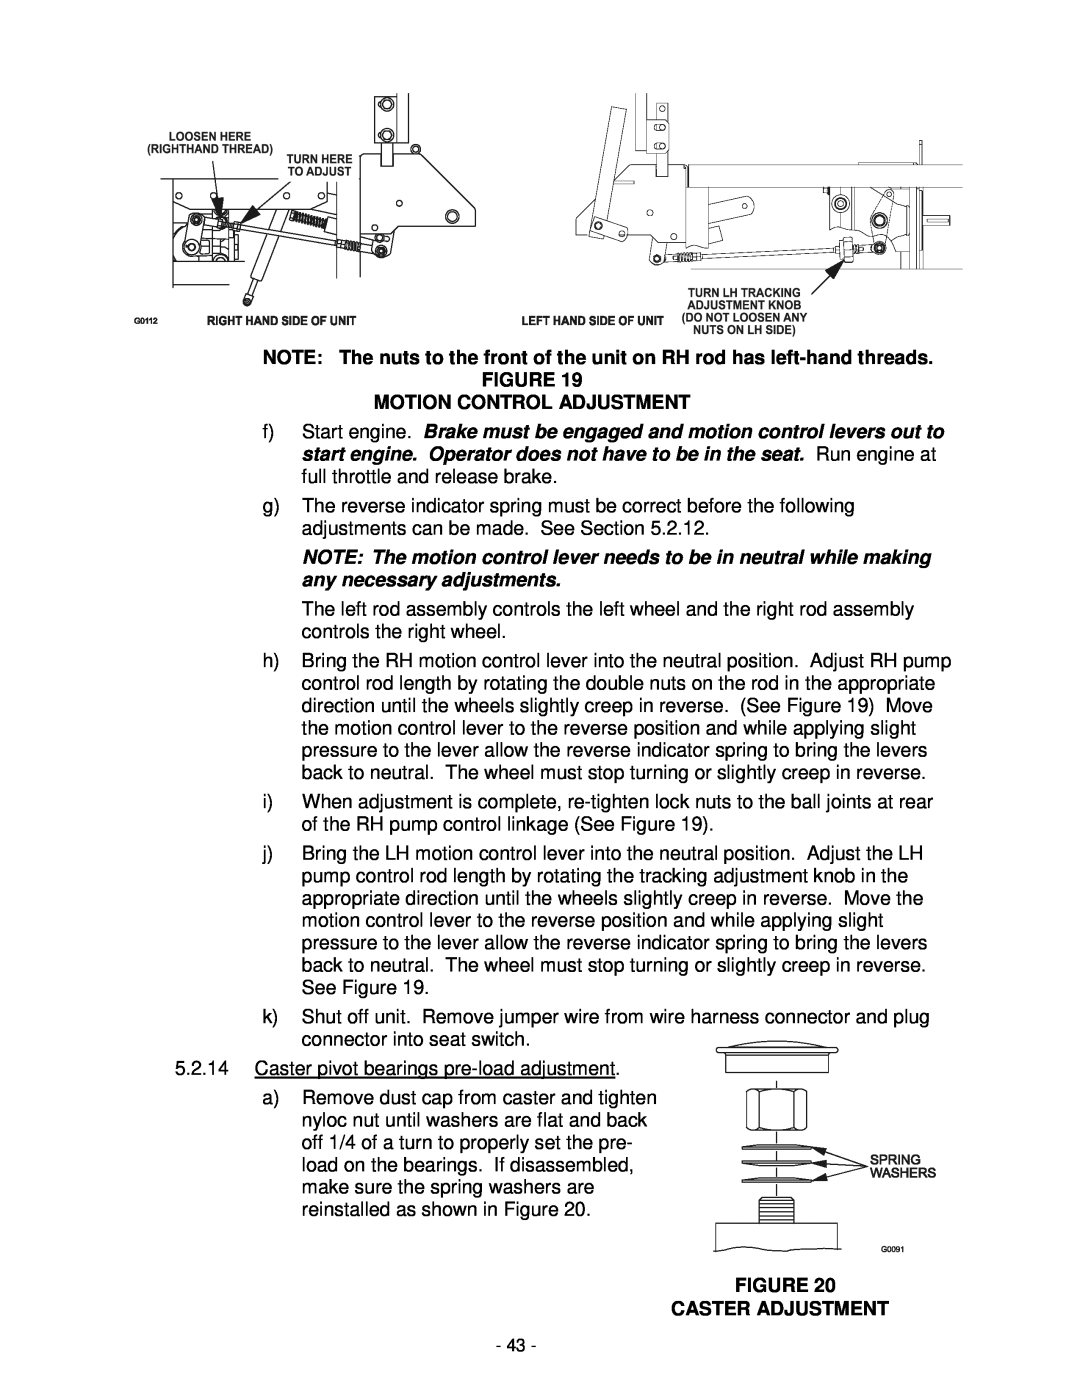 Exmark Lazer Z XP manual Motion Control Adjustment, Caster Adjustment 